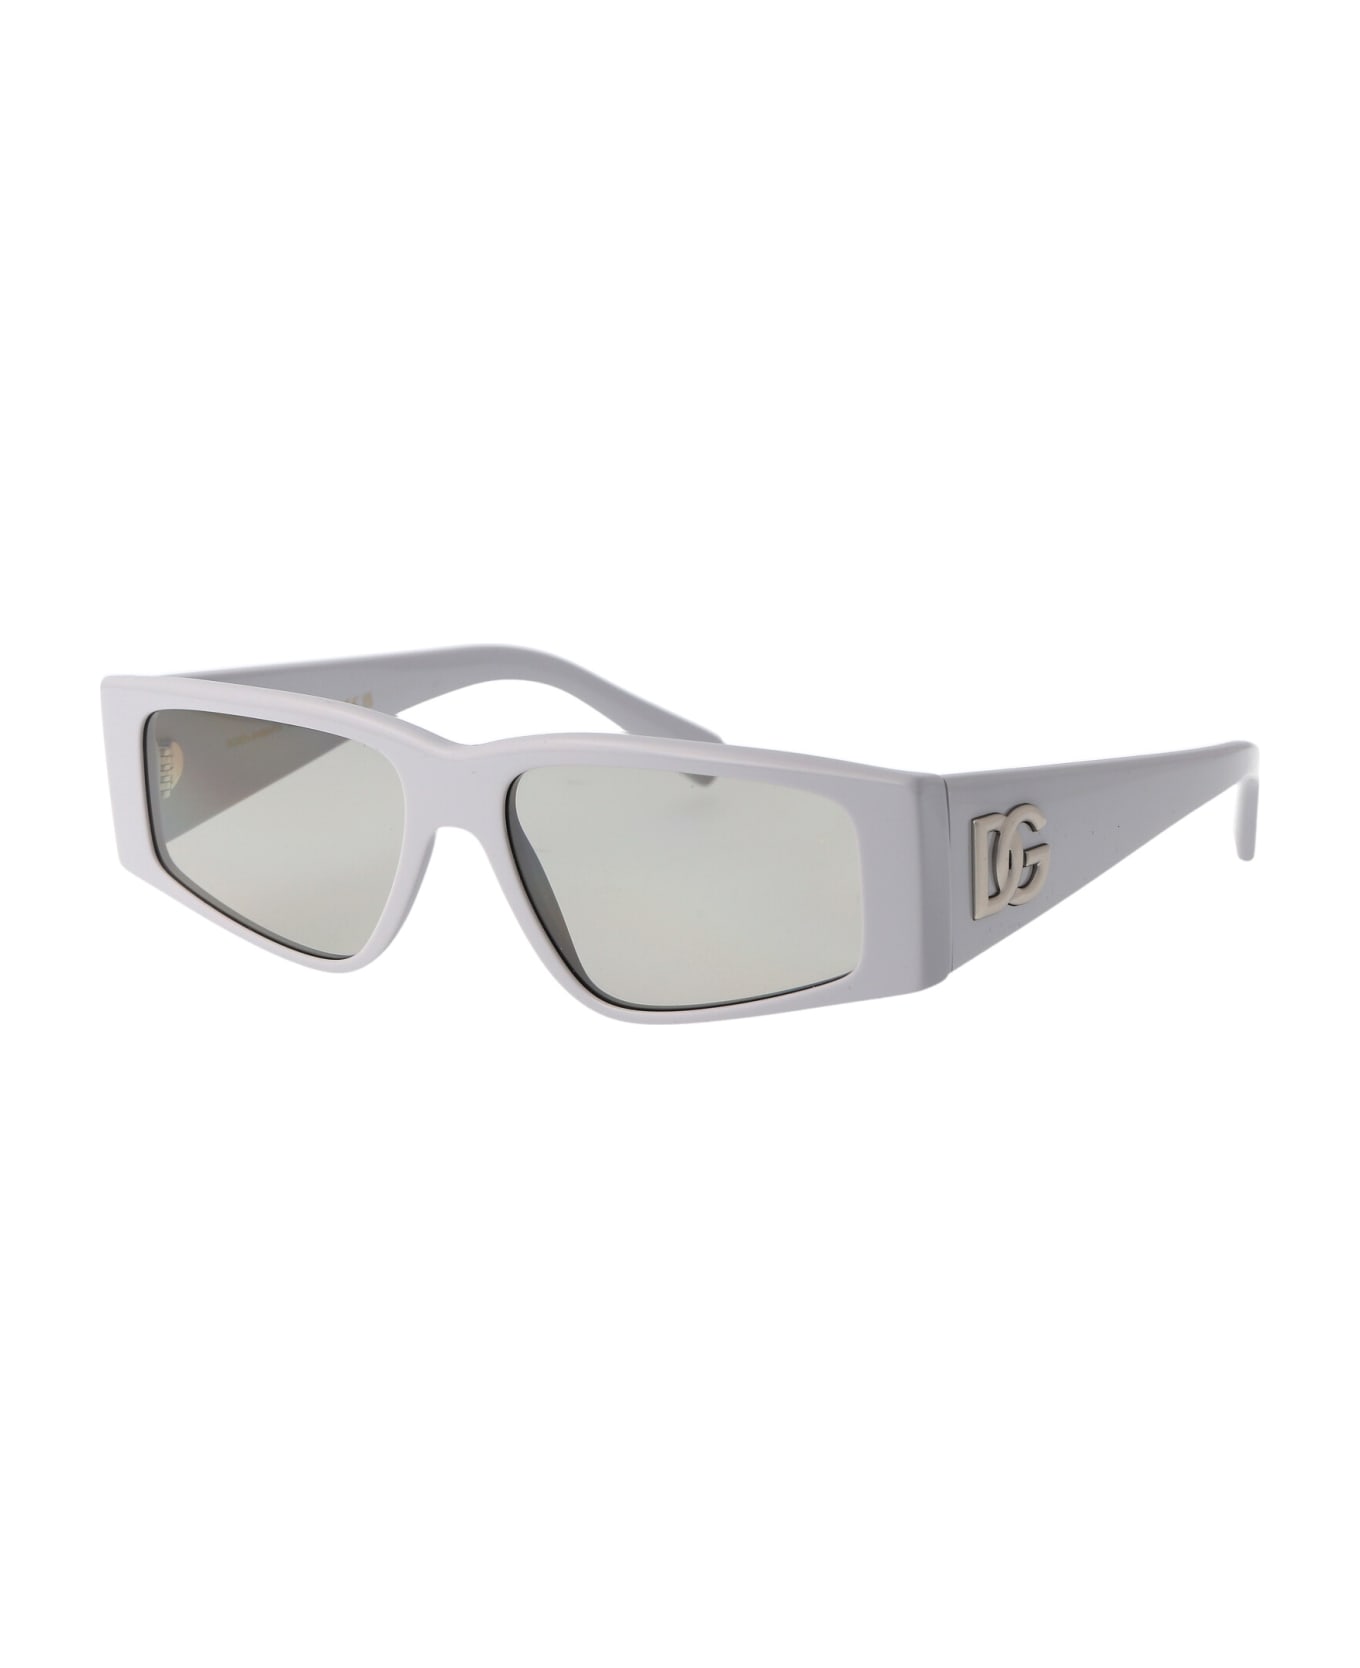 Dolce & Gabbana Eyewear 0dg4453 Sunglasses - 341887 Light Grey サングラス